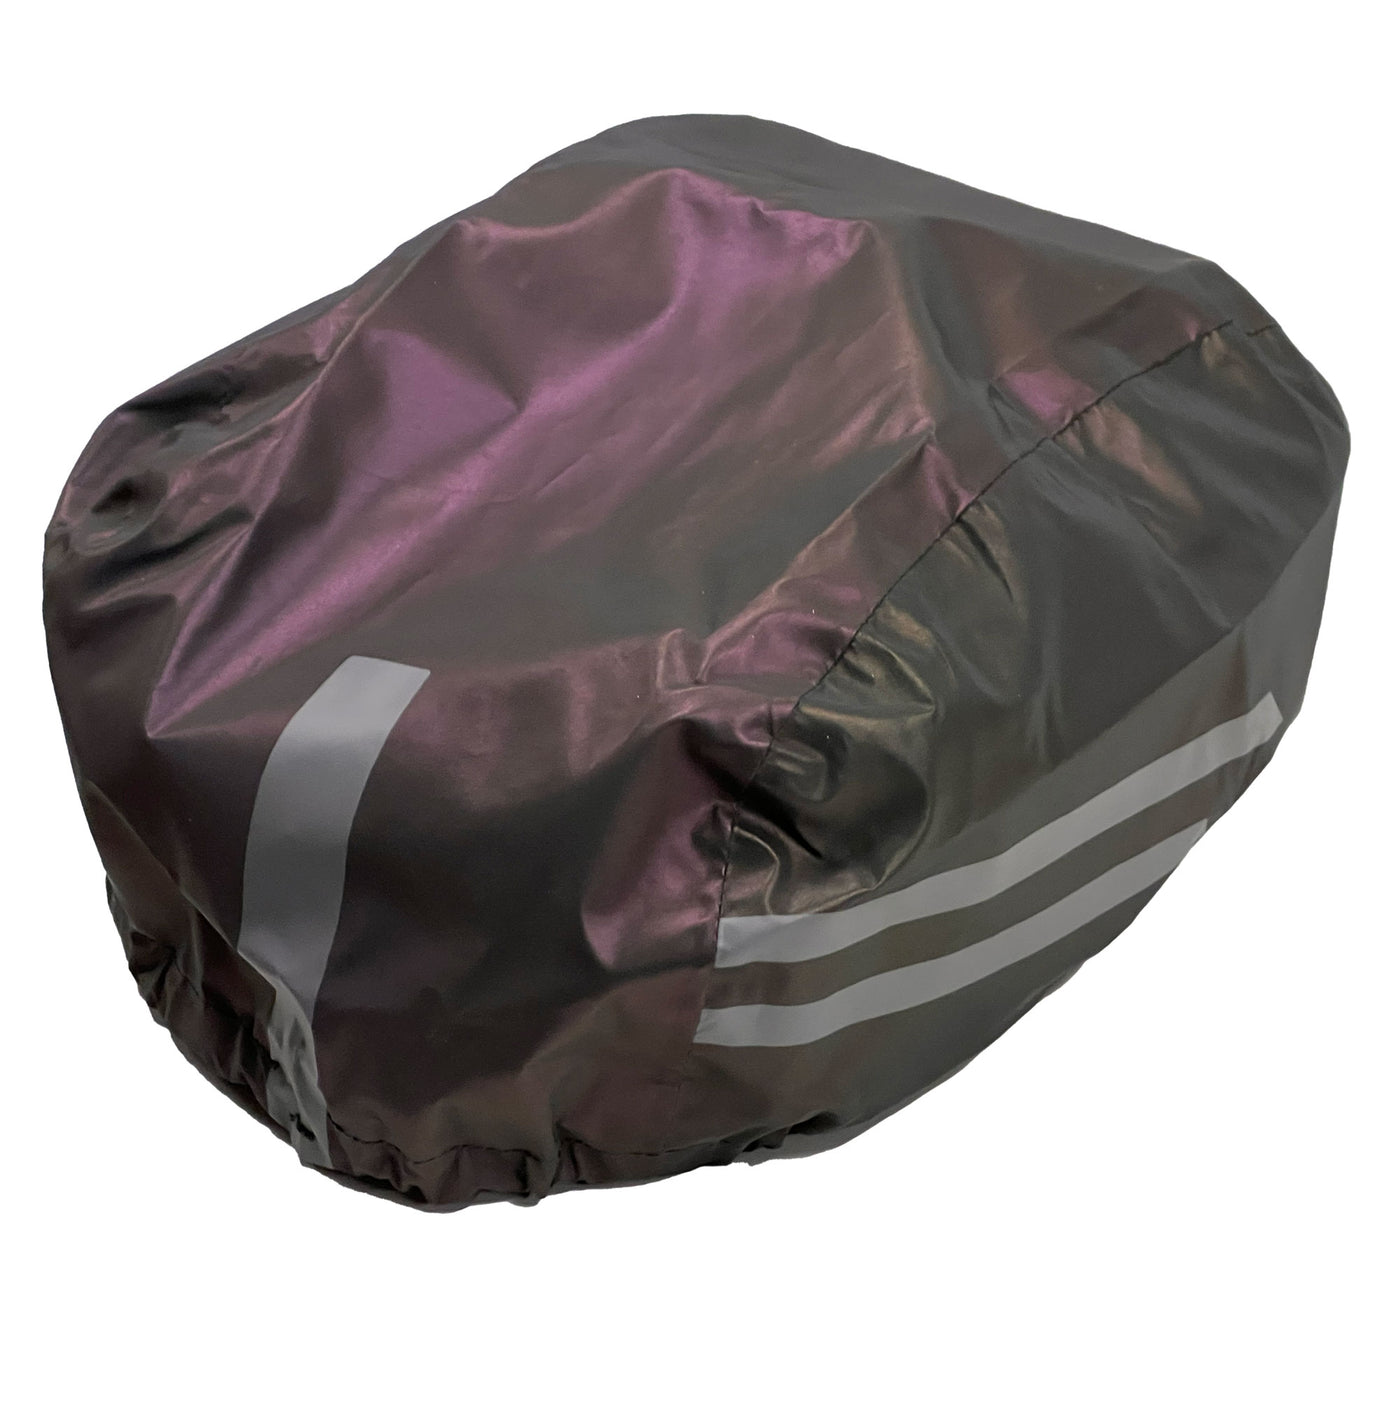 Sigr Tofsmes - Reflective Black Cycling Helmet Cover Unisex